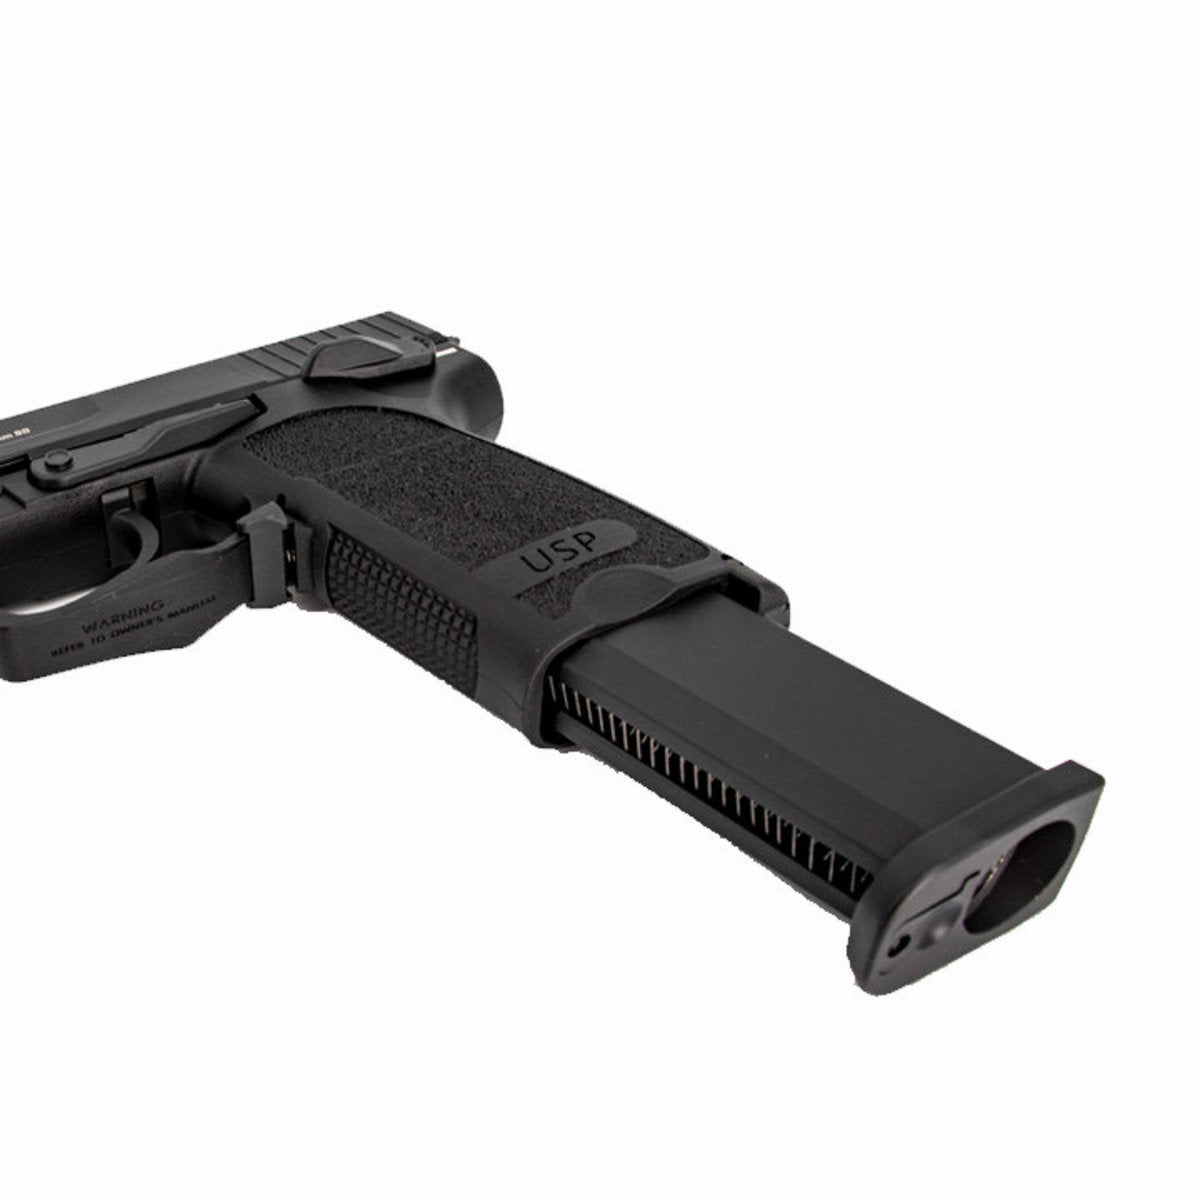 Umarex HK USP Compact GBB Airsoft Pistol (KWA)